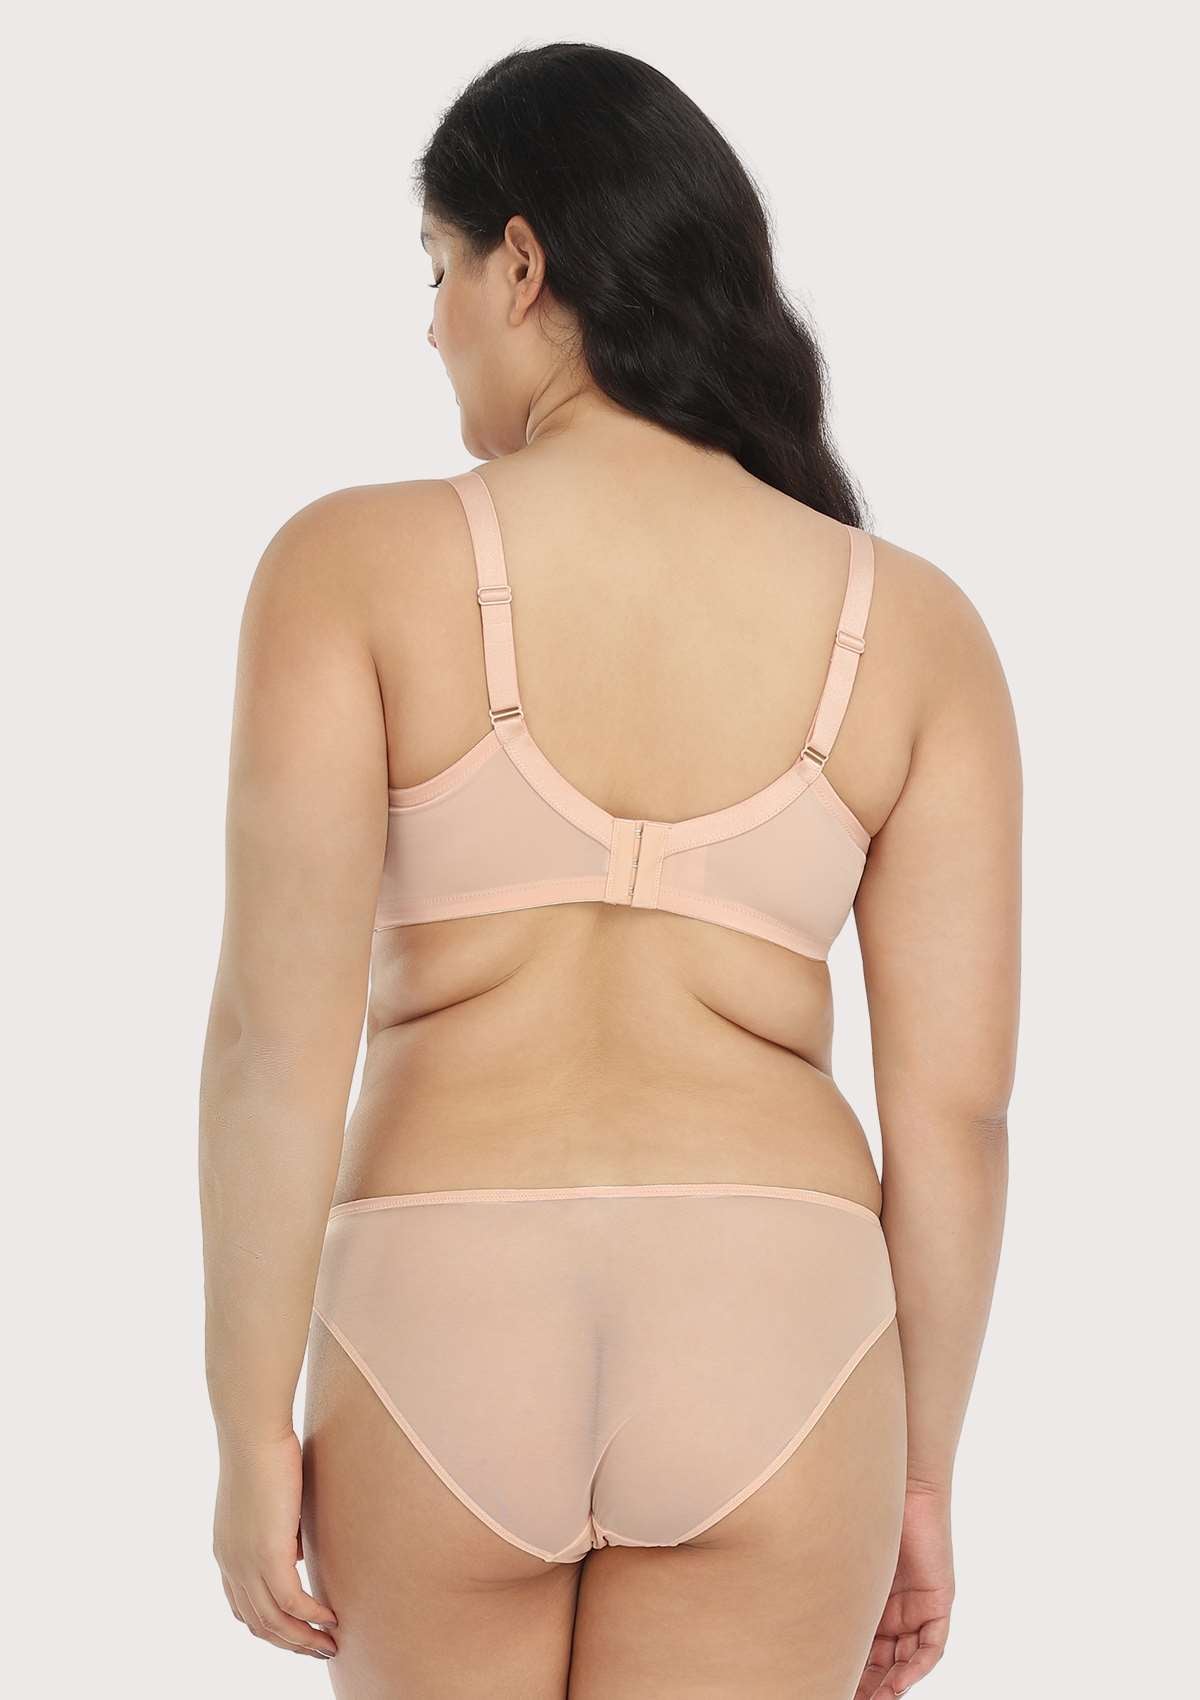 HSIA Sunflower Matching Bra And Panties Set: Comfortable Plus Size Bra - Pink / 46 / DDD/F